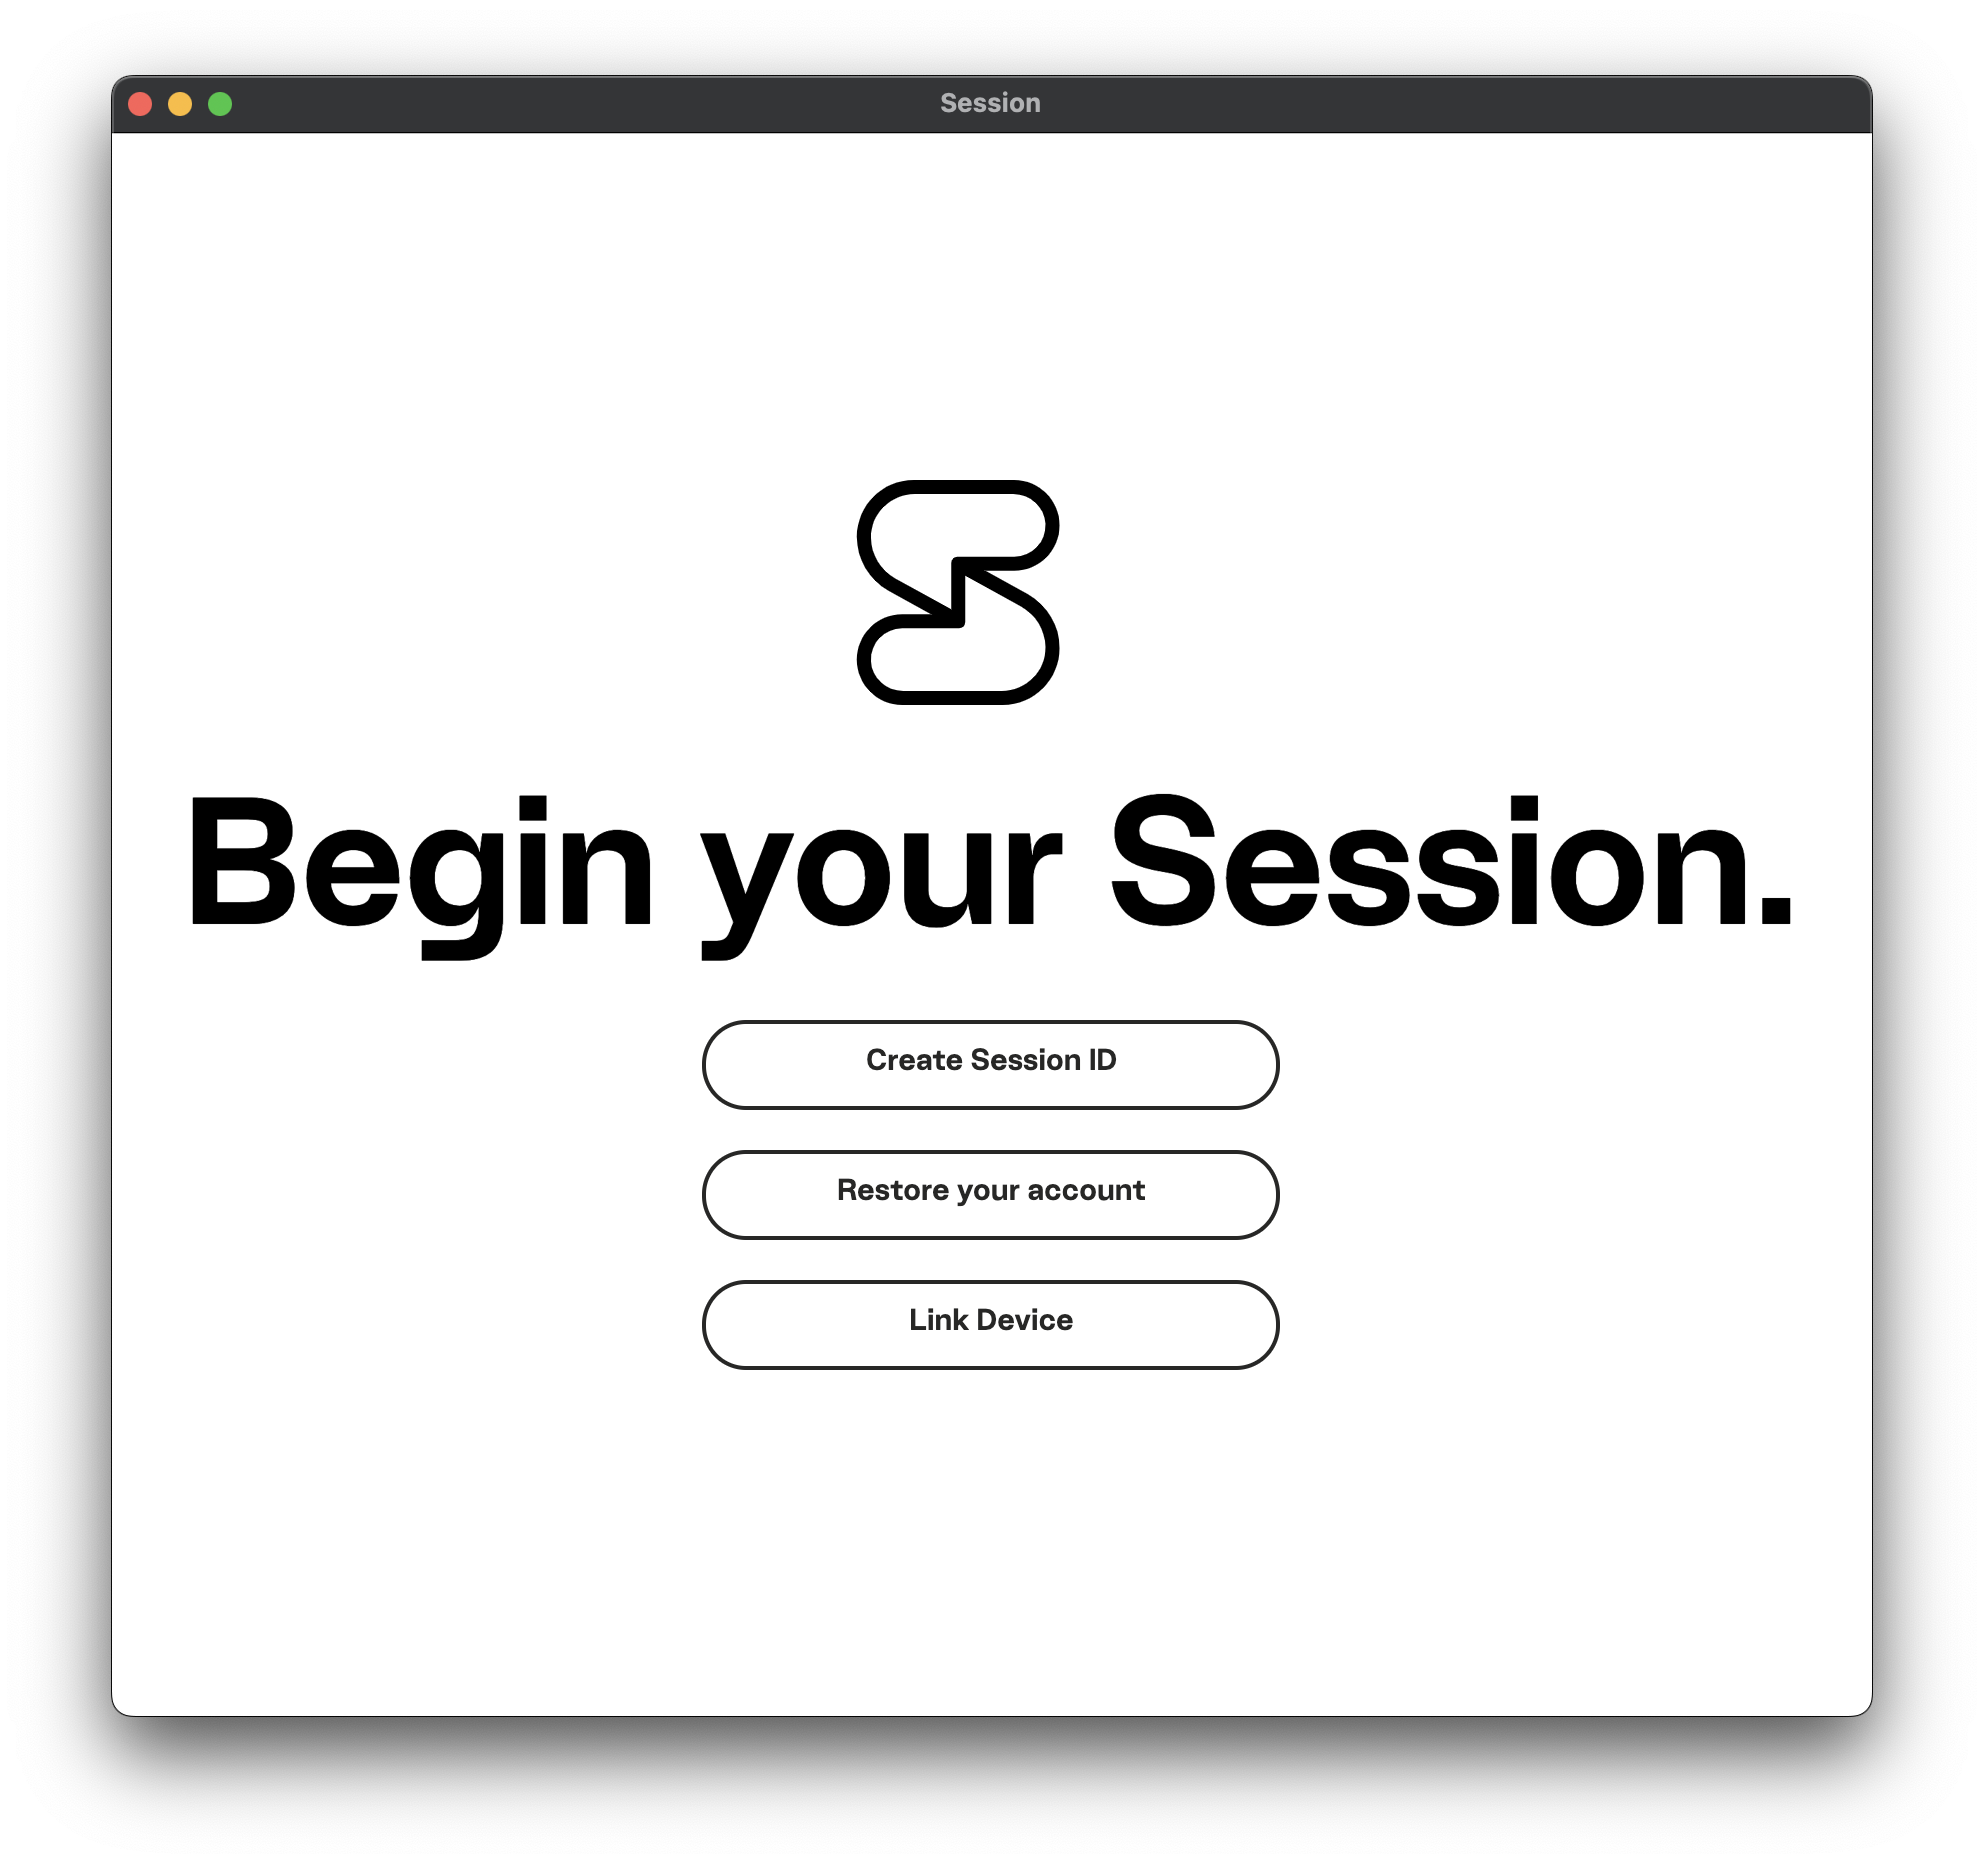 Session Login
(macOS)